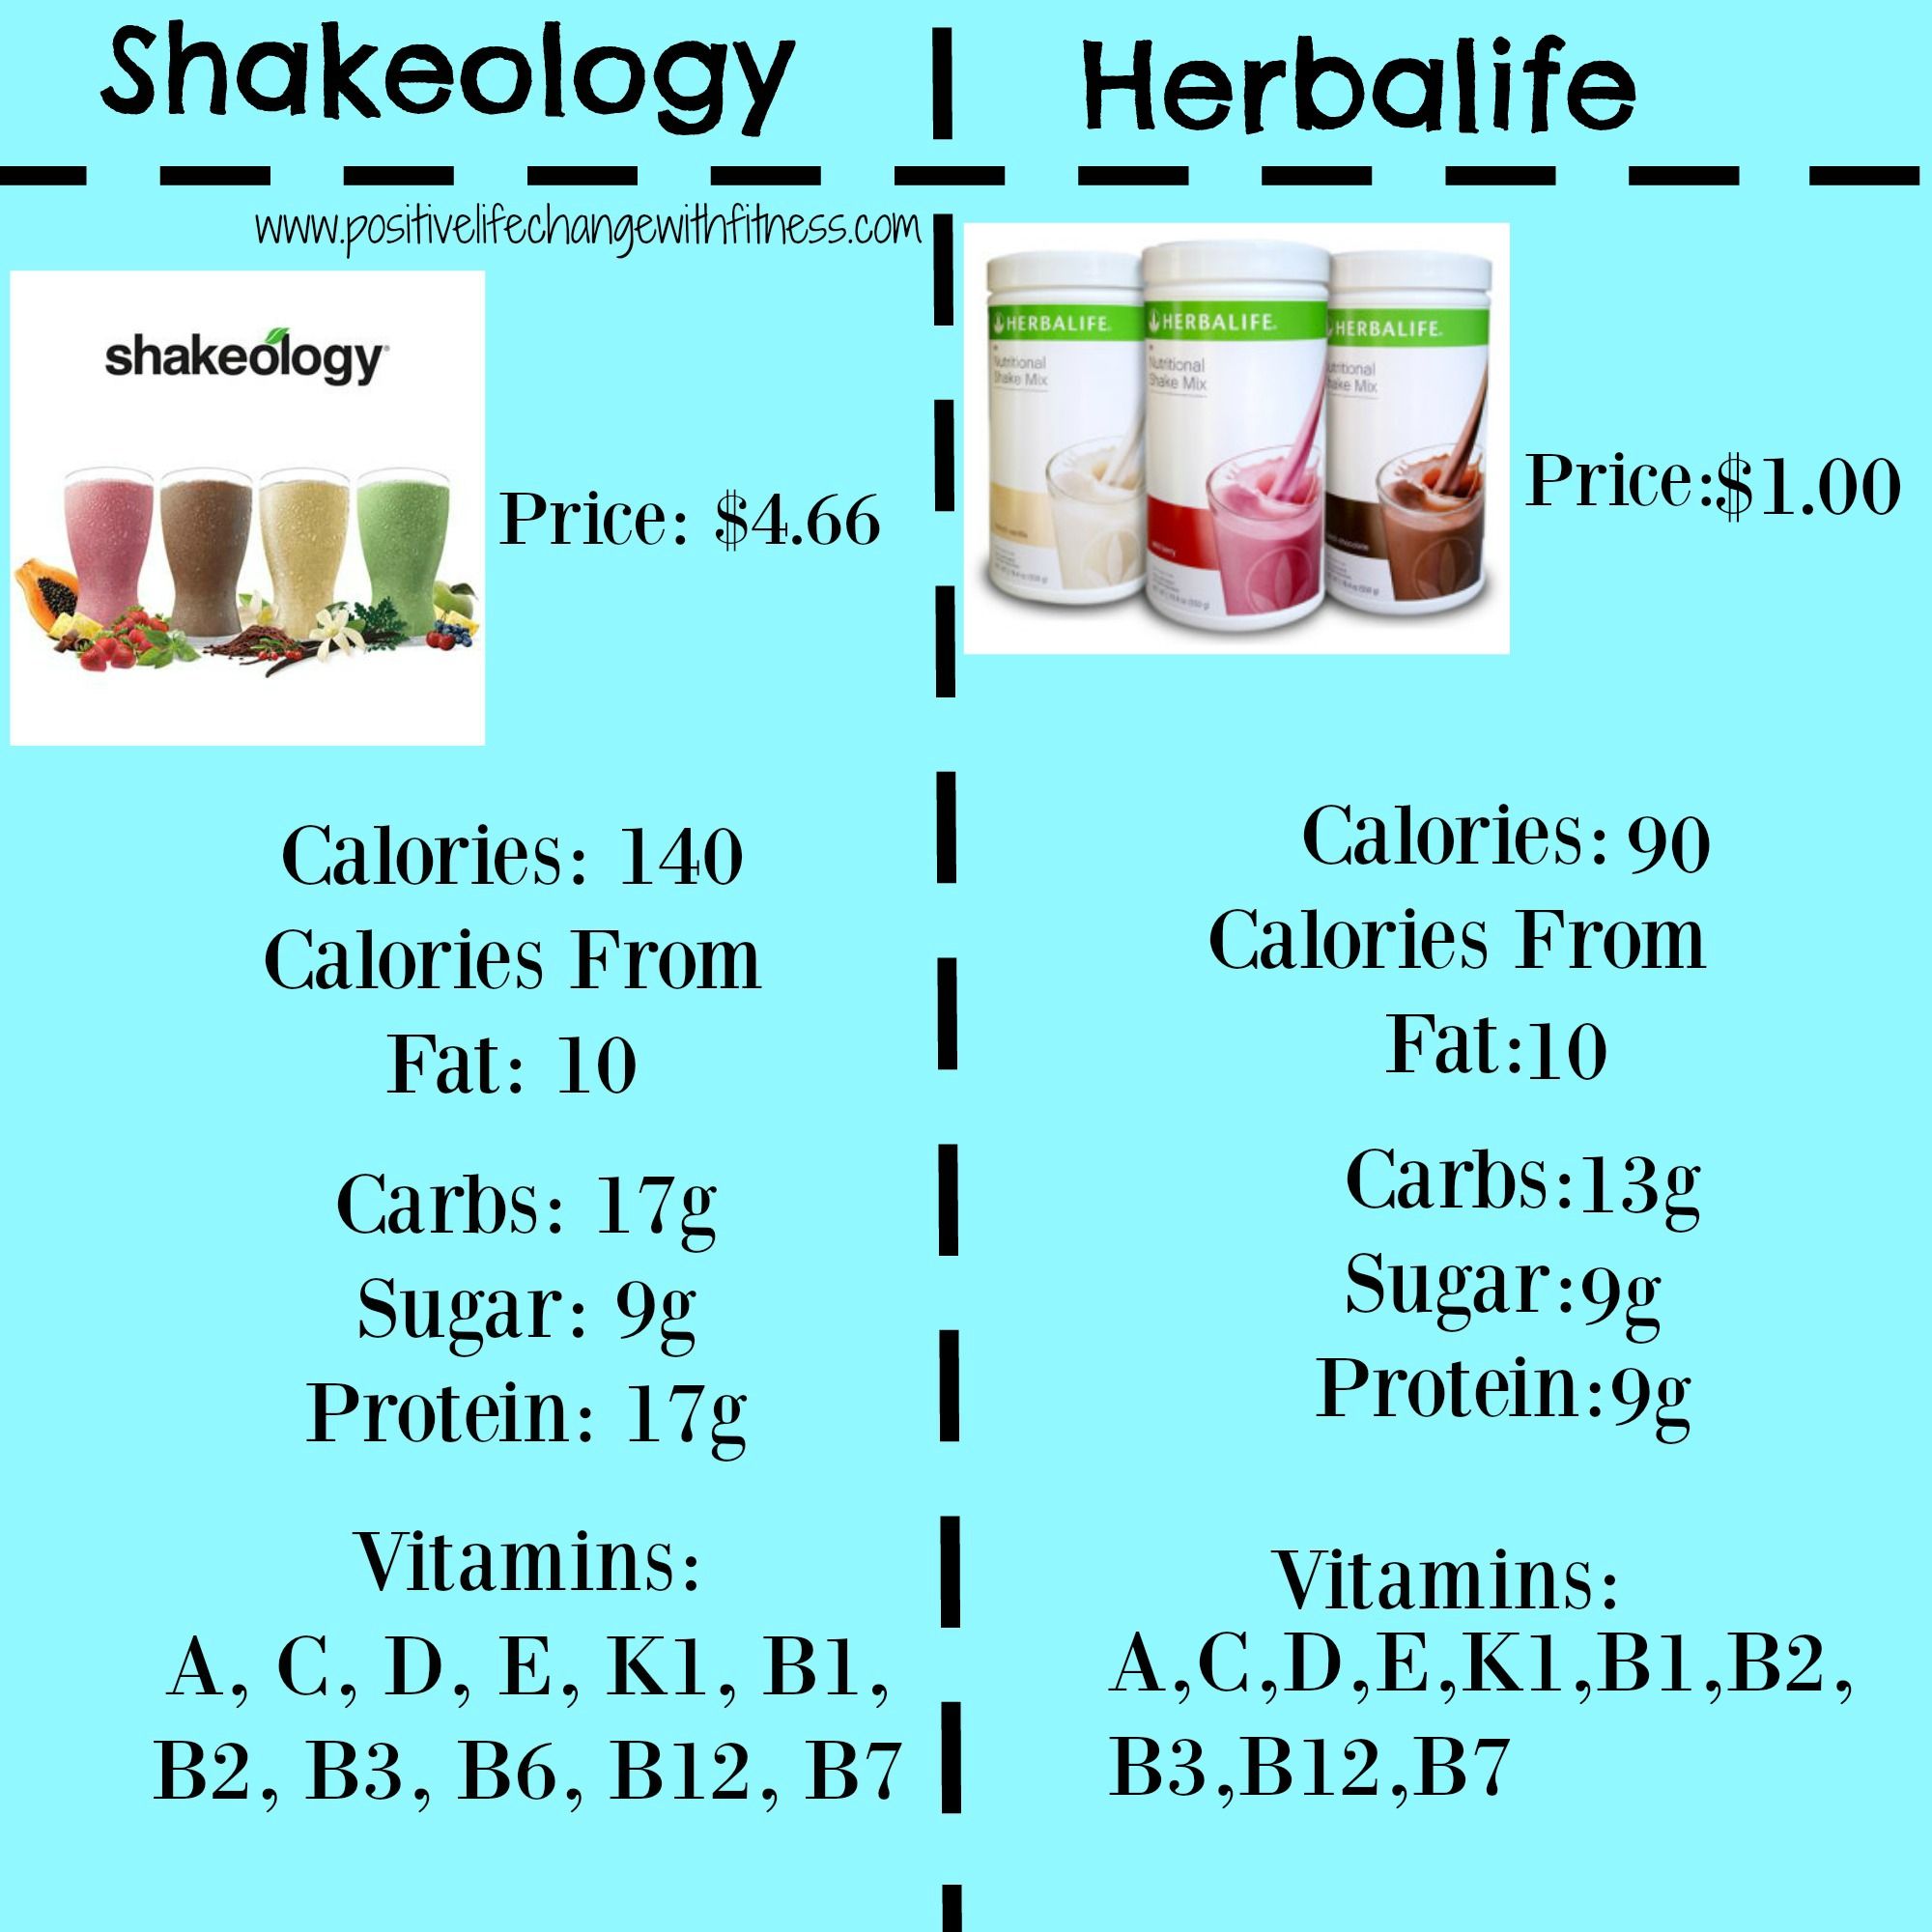 Shakeology Vs. Herbalife! Price, Calories, Carbs, Sugar ...